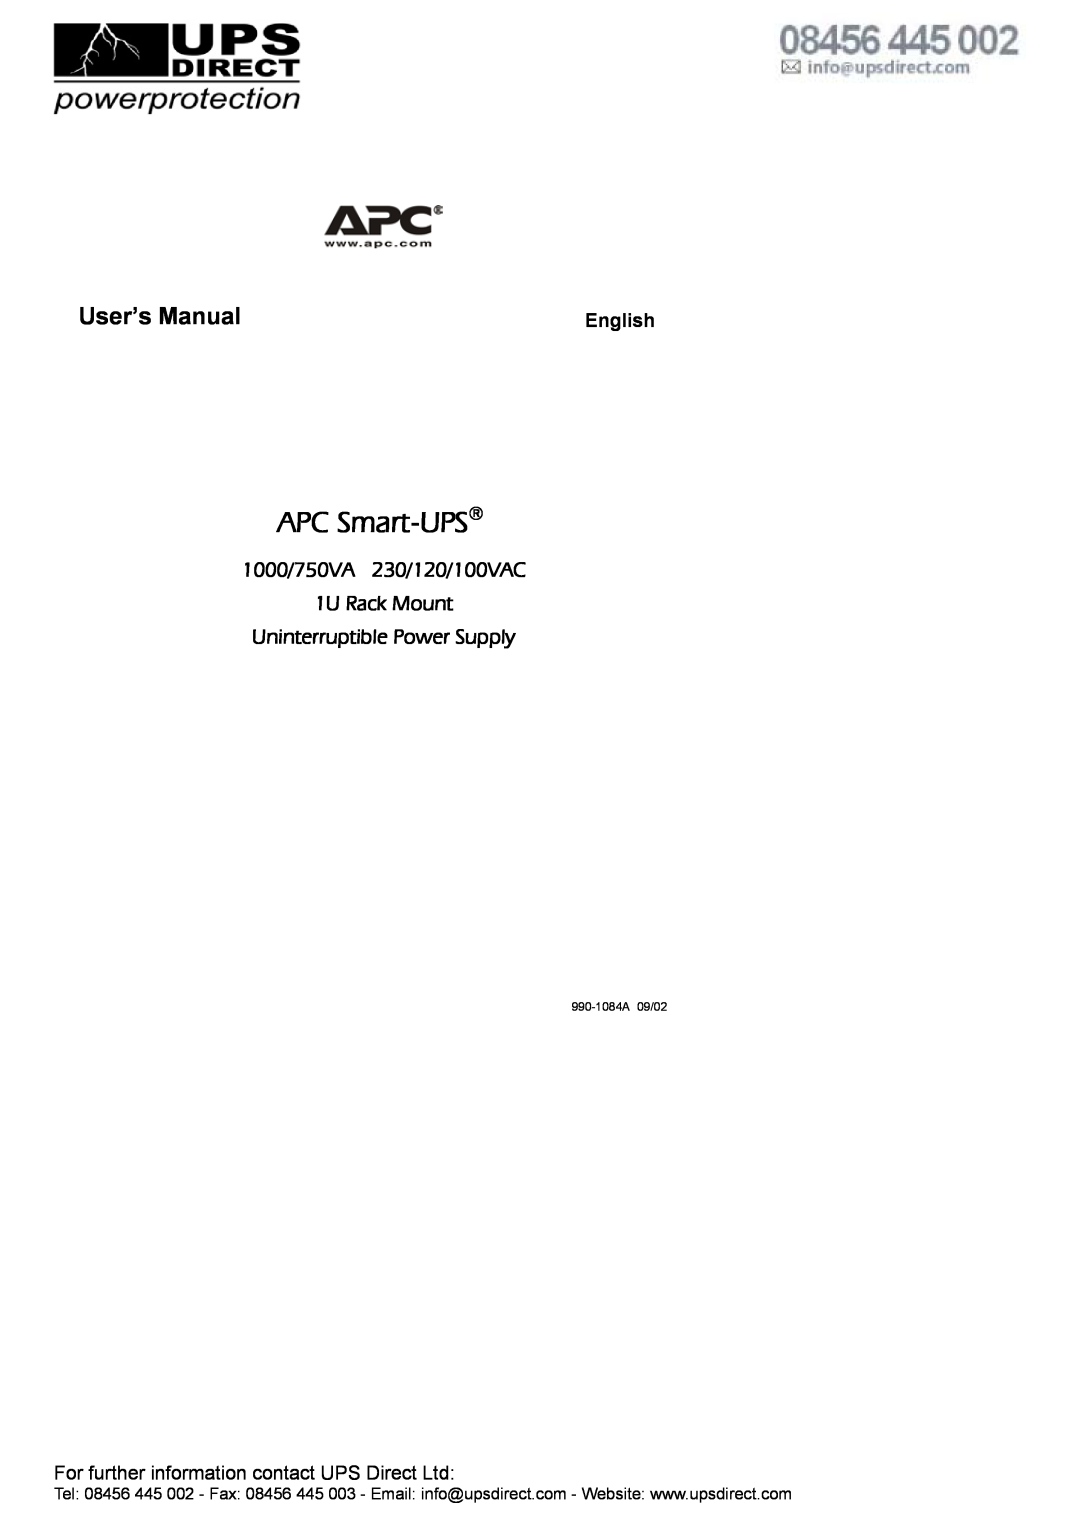 American Power Conversion user manual APC Smart-UPS, User’s Manual, 1000/750VA 230/120/100VAC 1U Rack Mount, English 